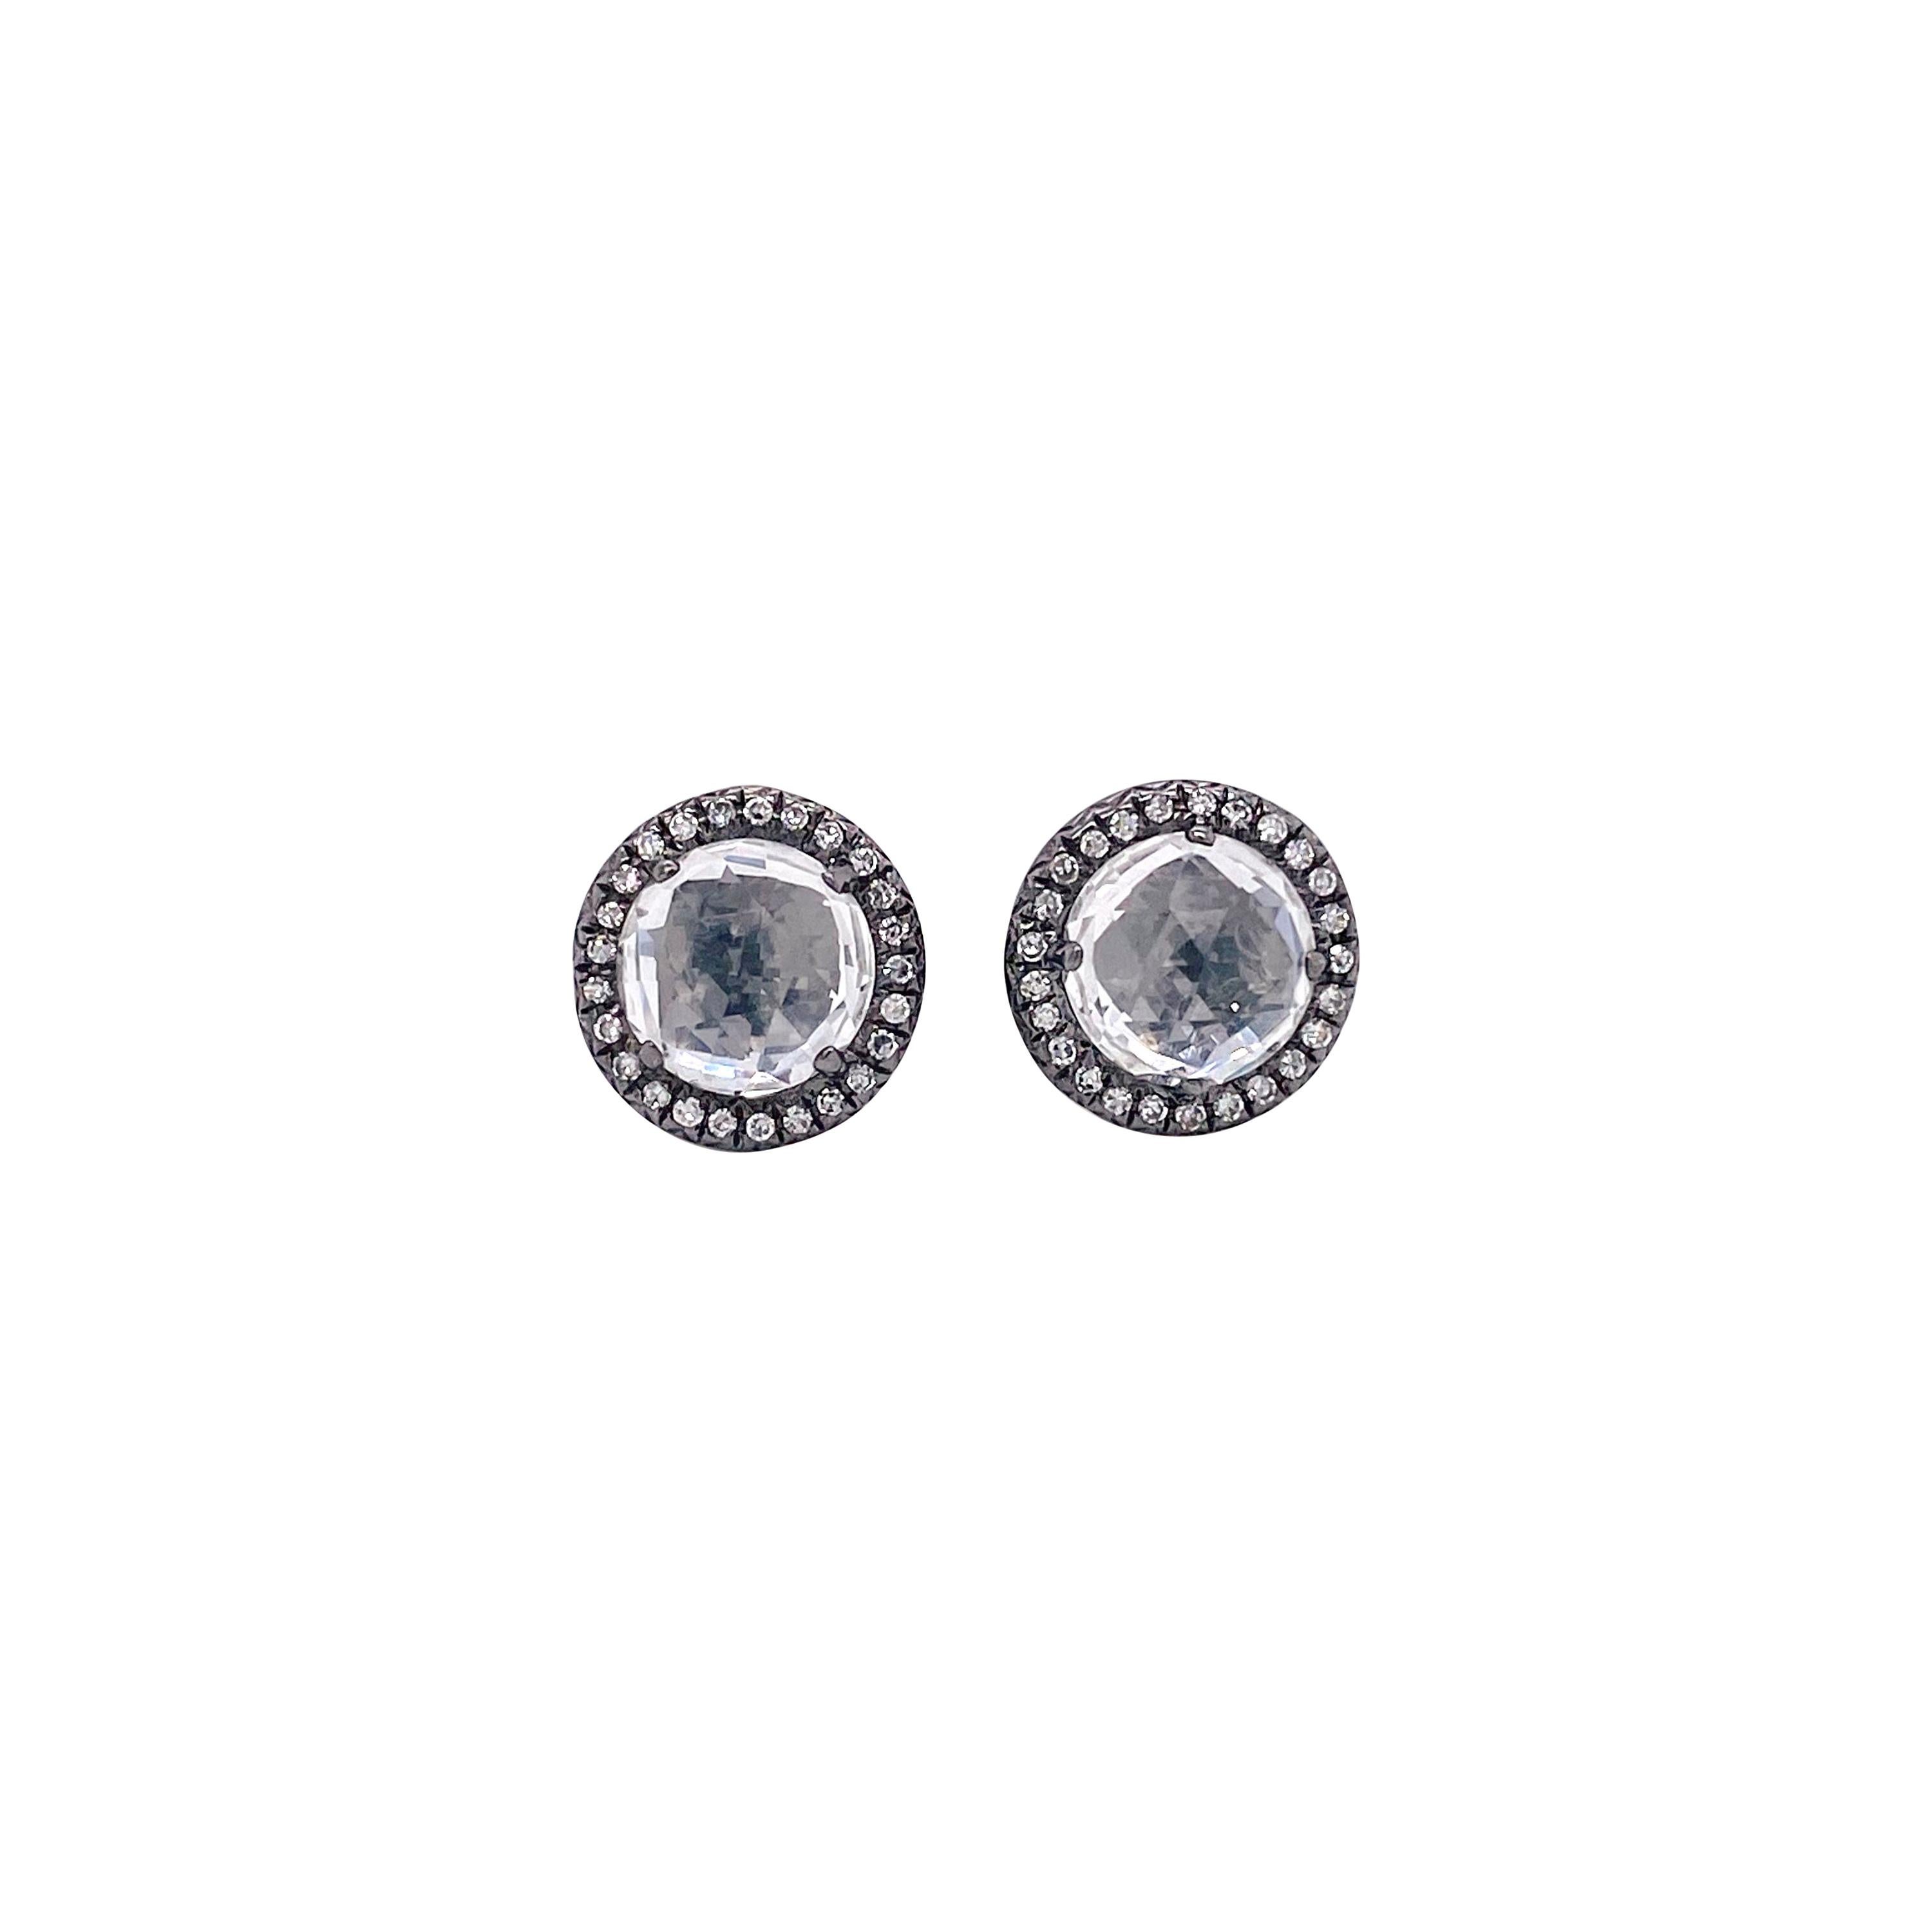 Topaz Diamond Studs Earrings, Halo of Diamonds, 2.50 Carat White Topaz, Black